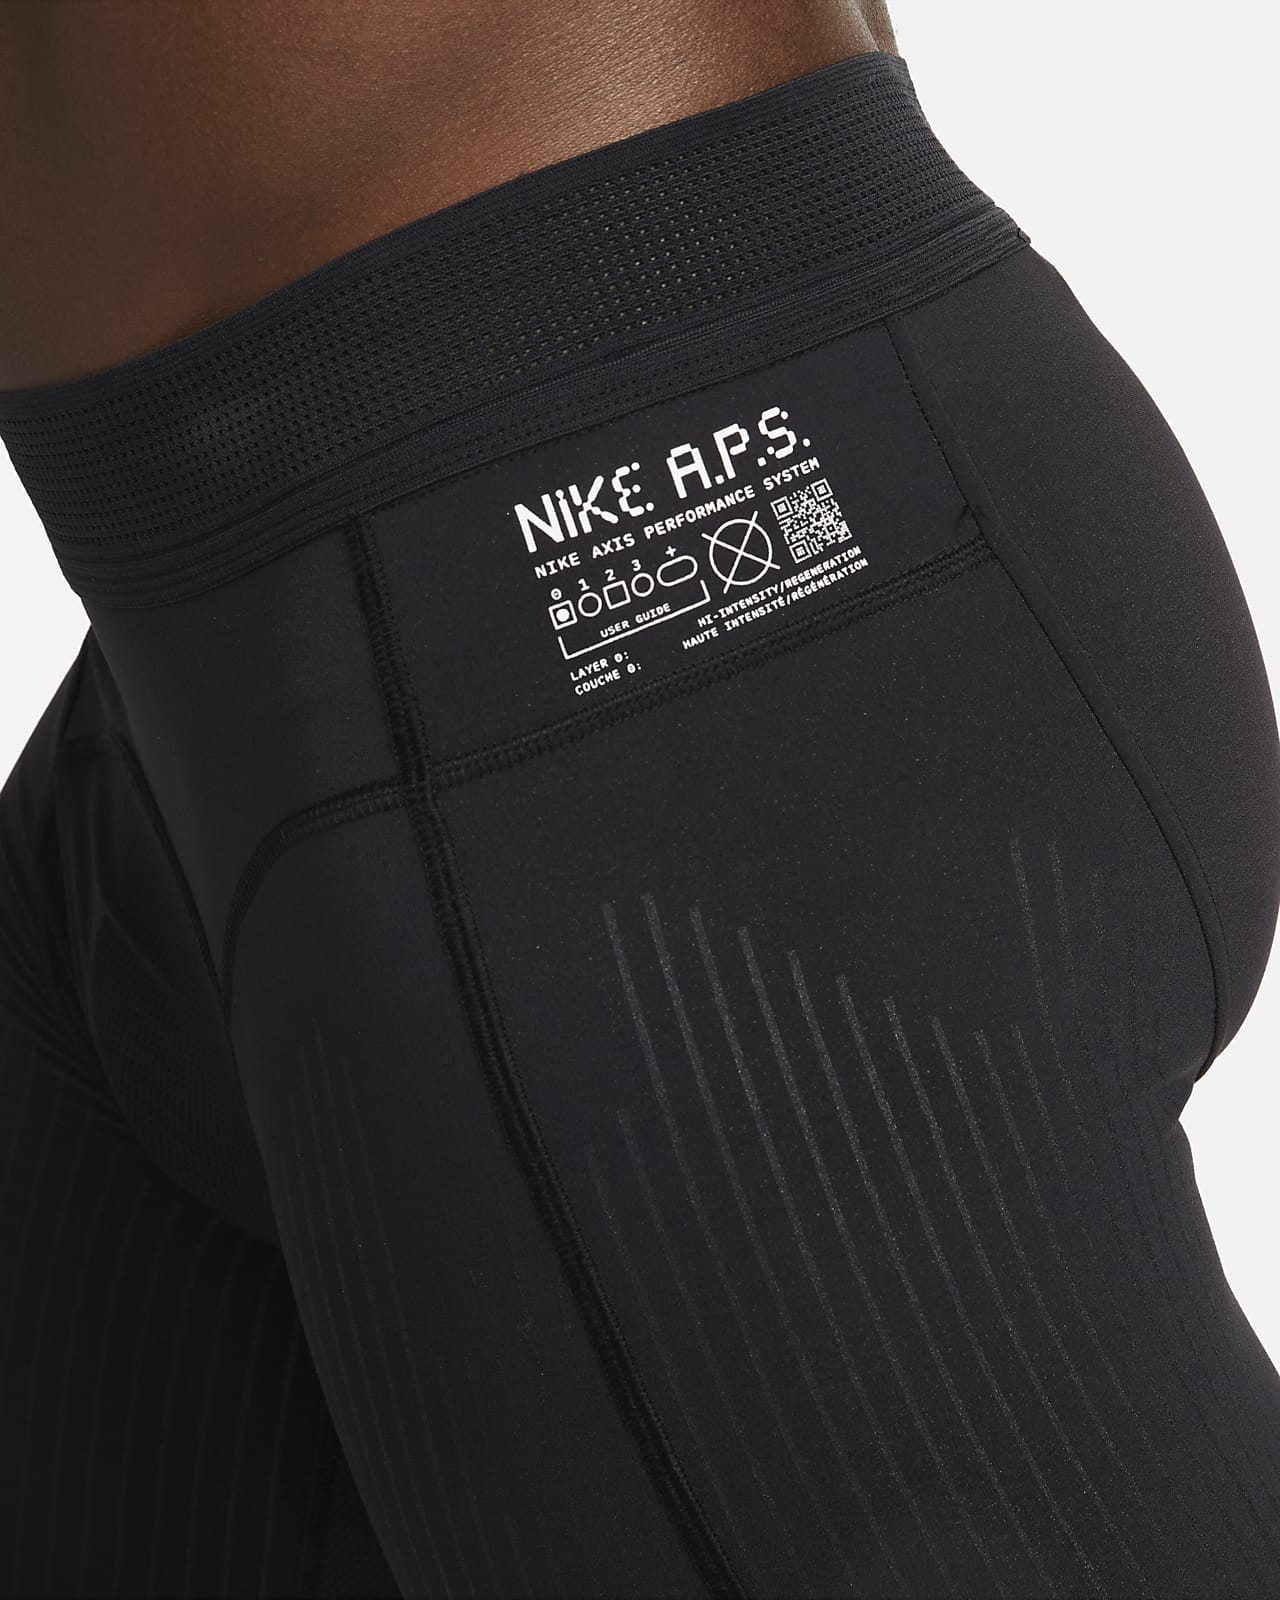 NWT $55 Nike Thermal Dri-Fit Compression Tights Pants 748868-100